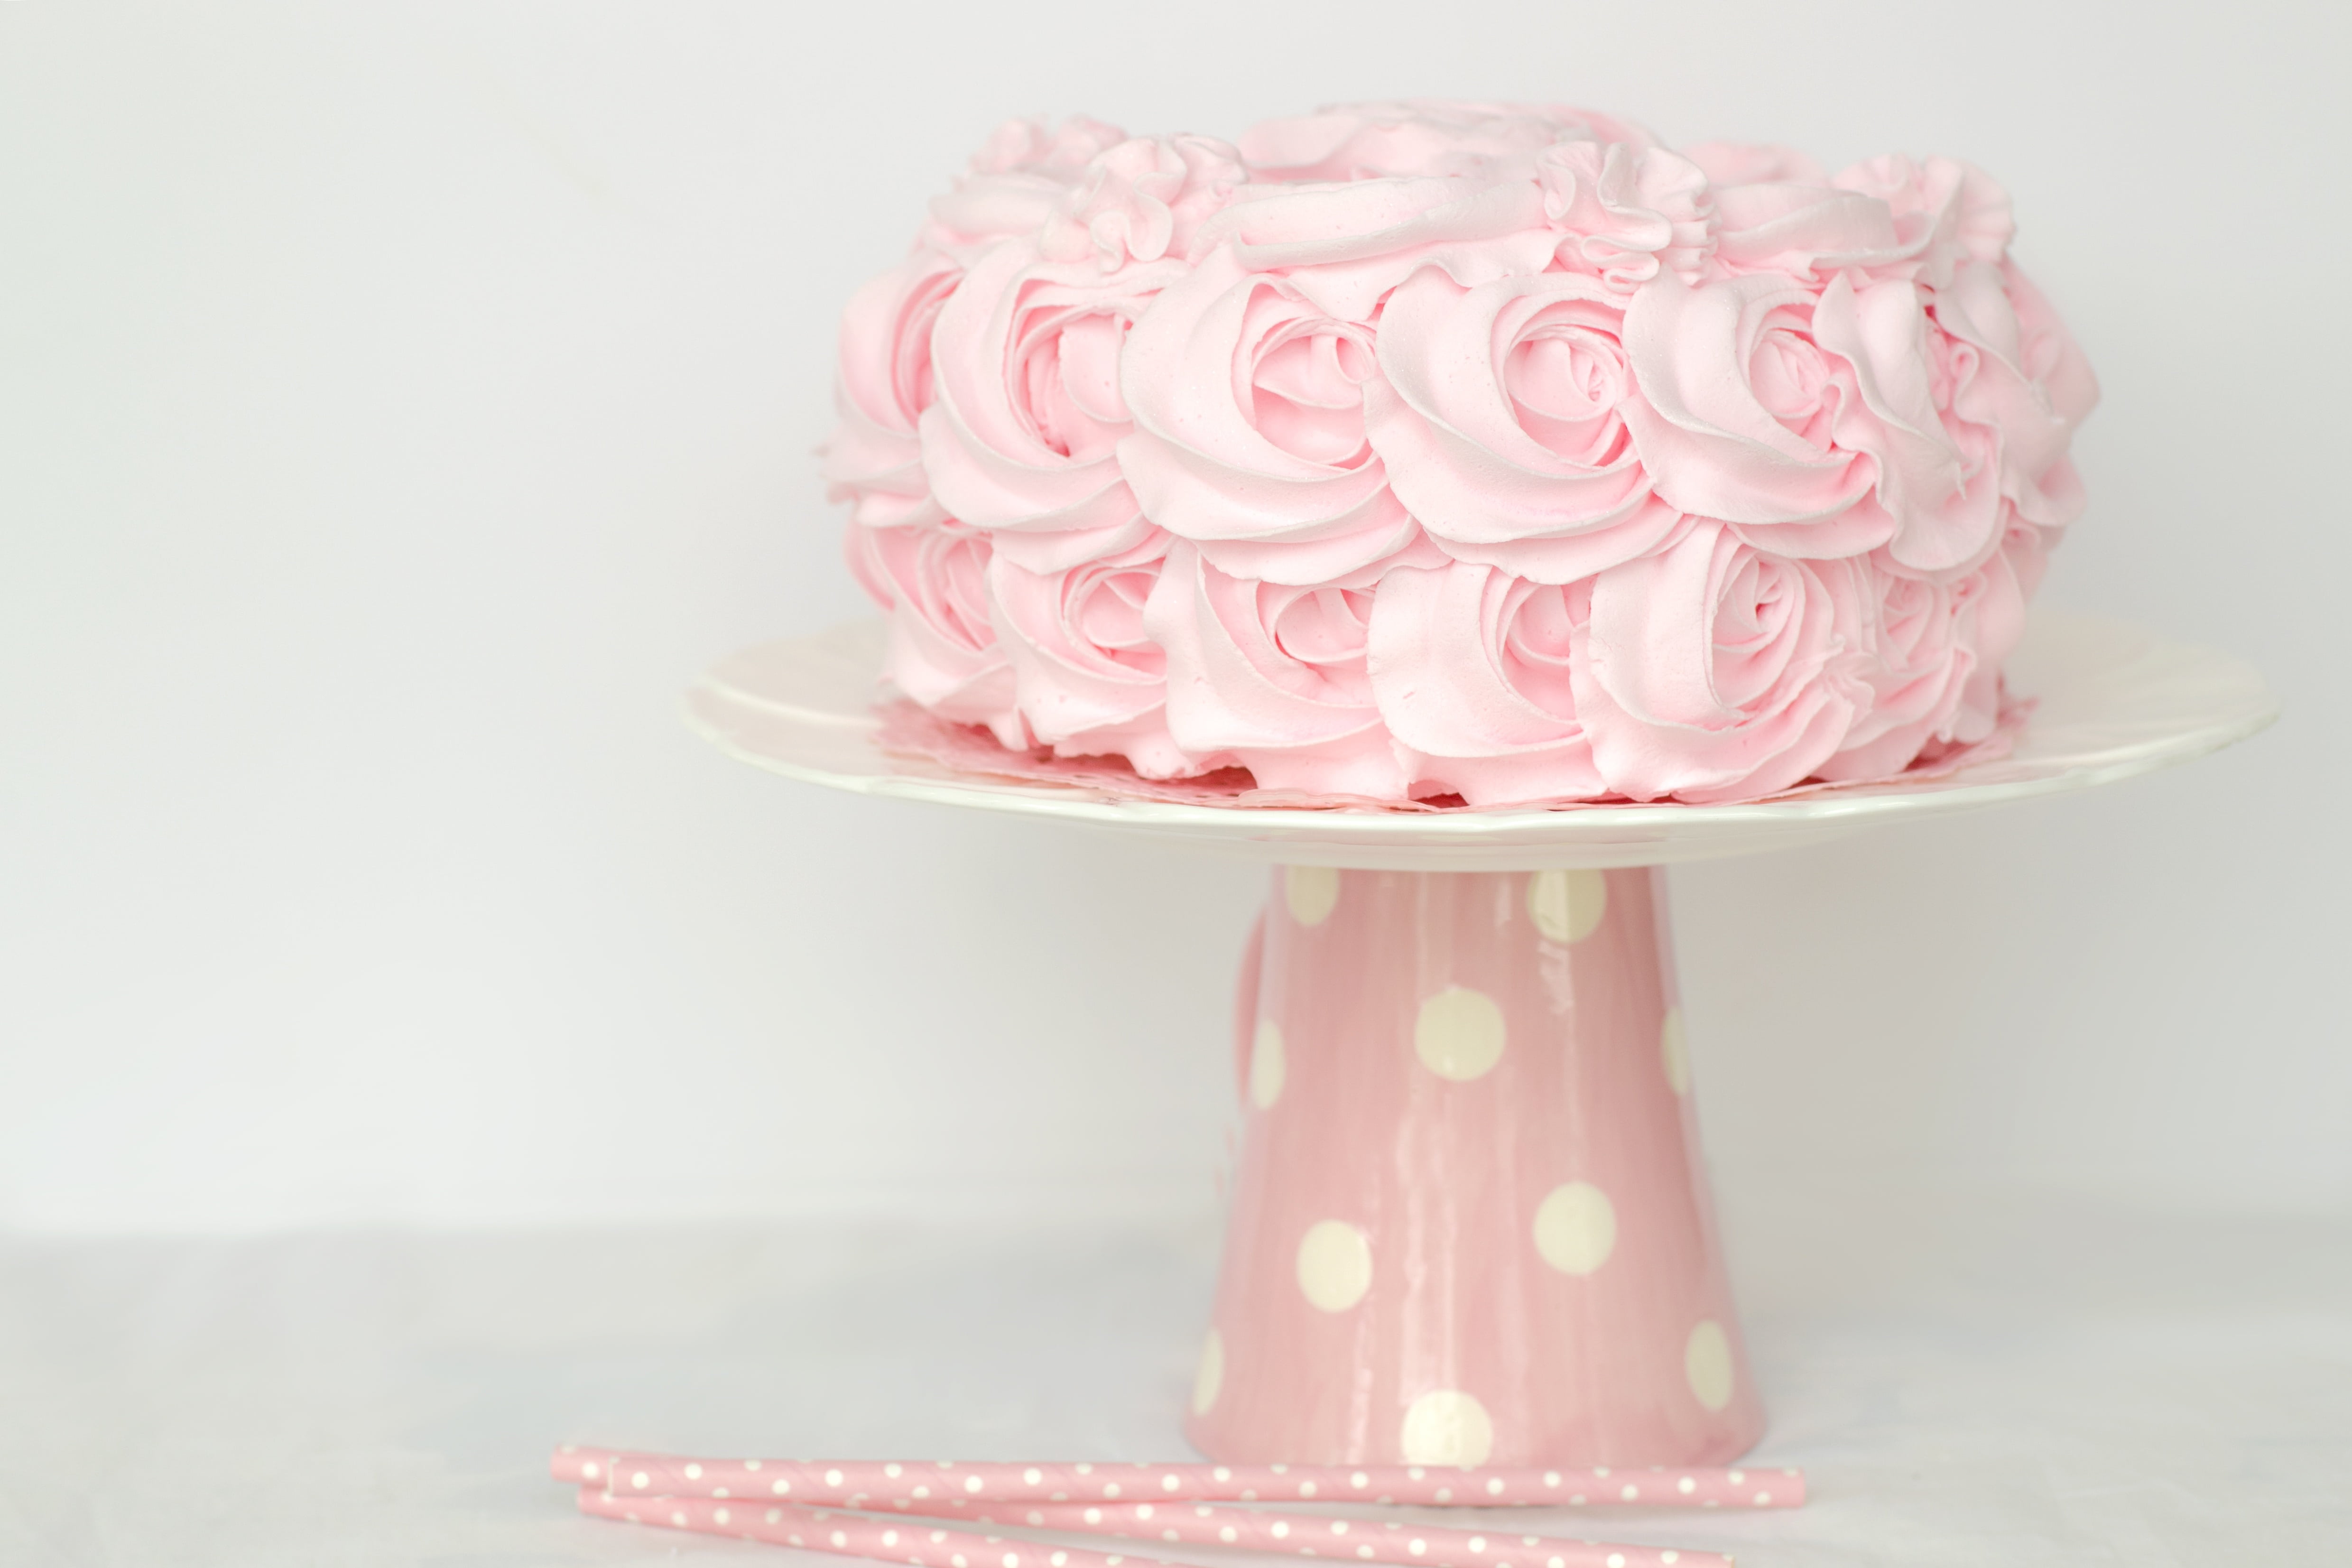 General 4958x3305 cake simple background pink food minimalism